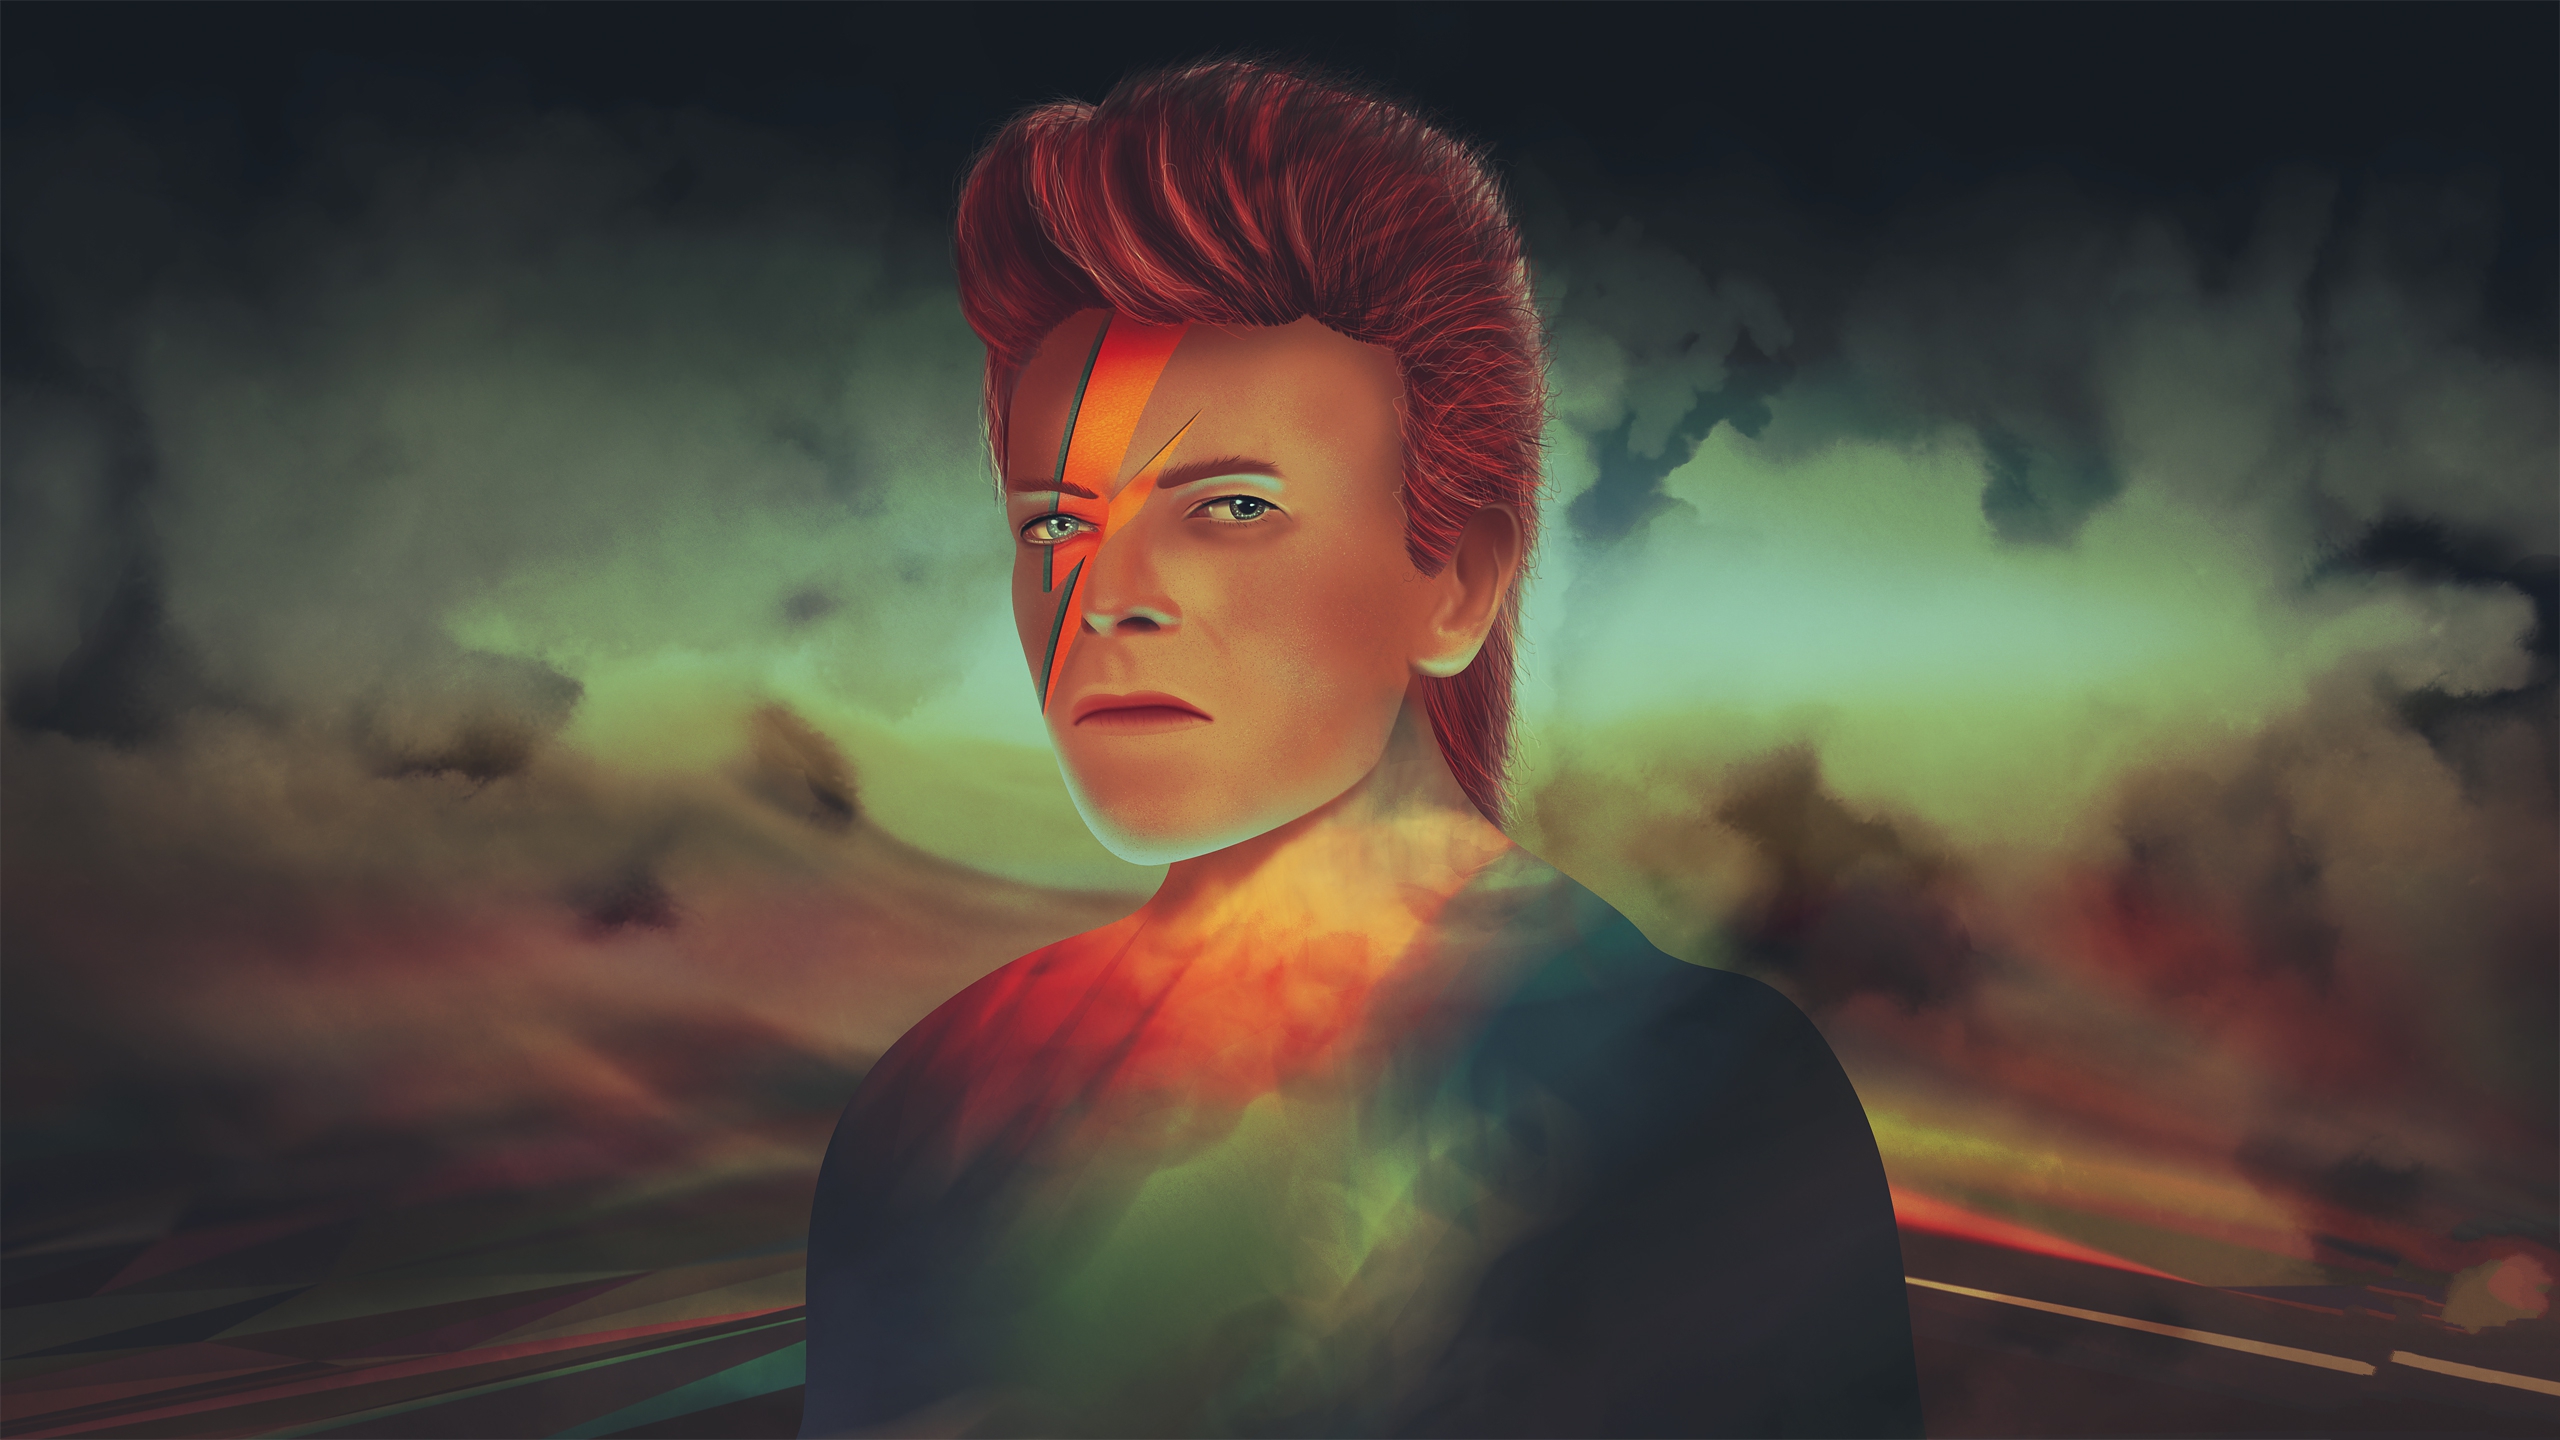 David Bowie Wallpaper For Desktop